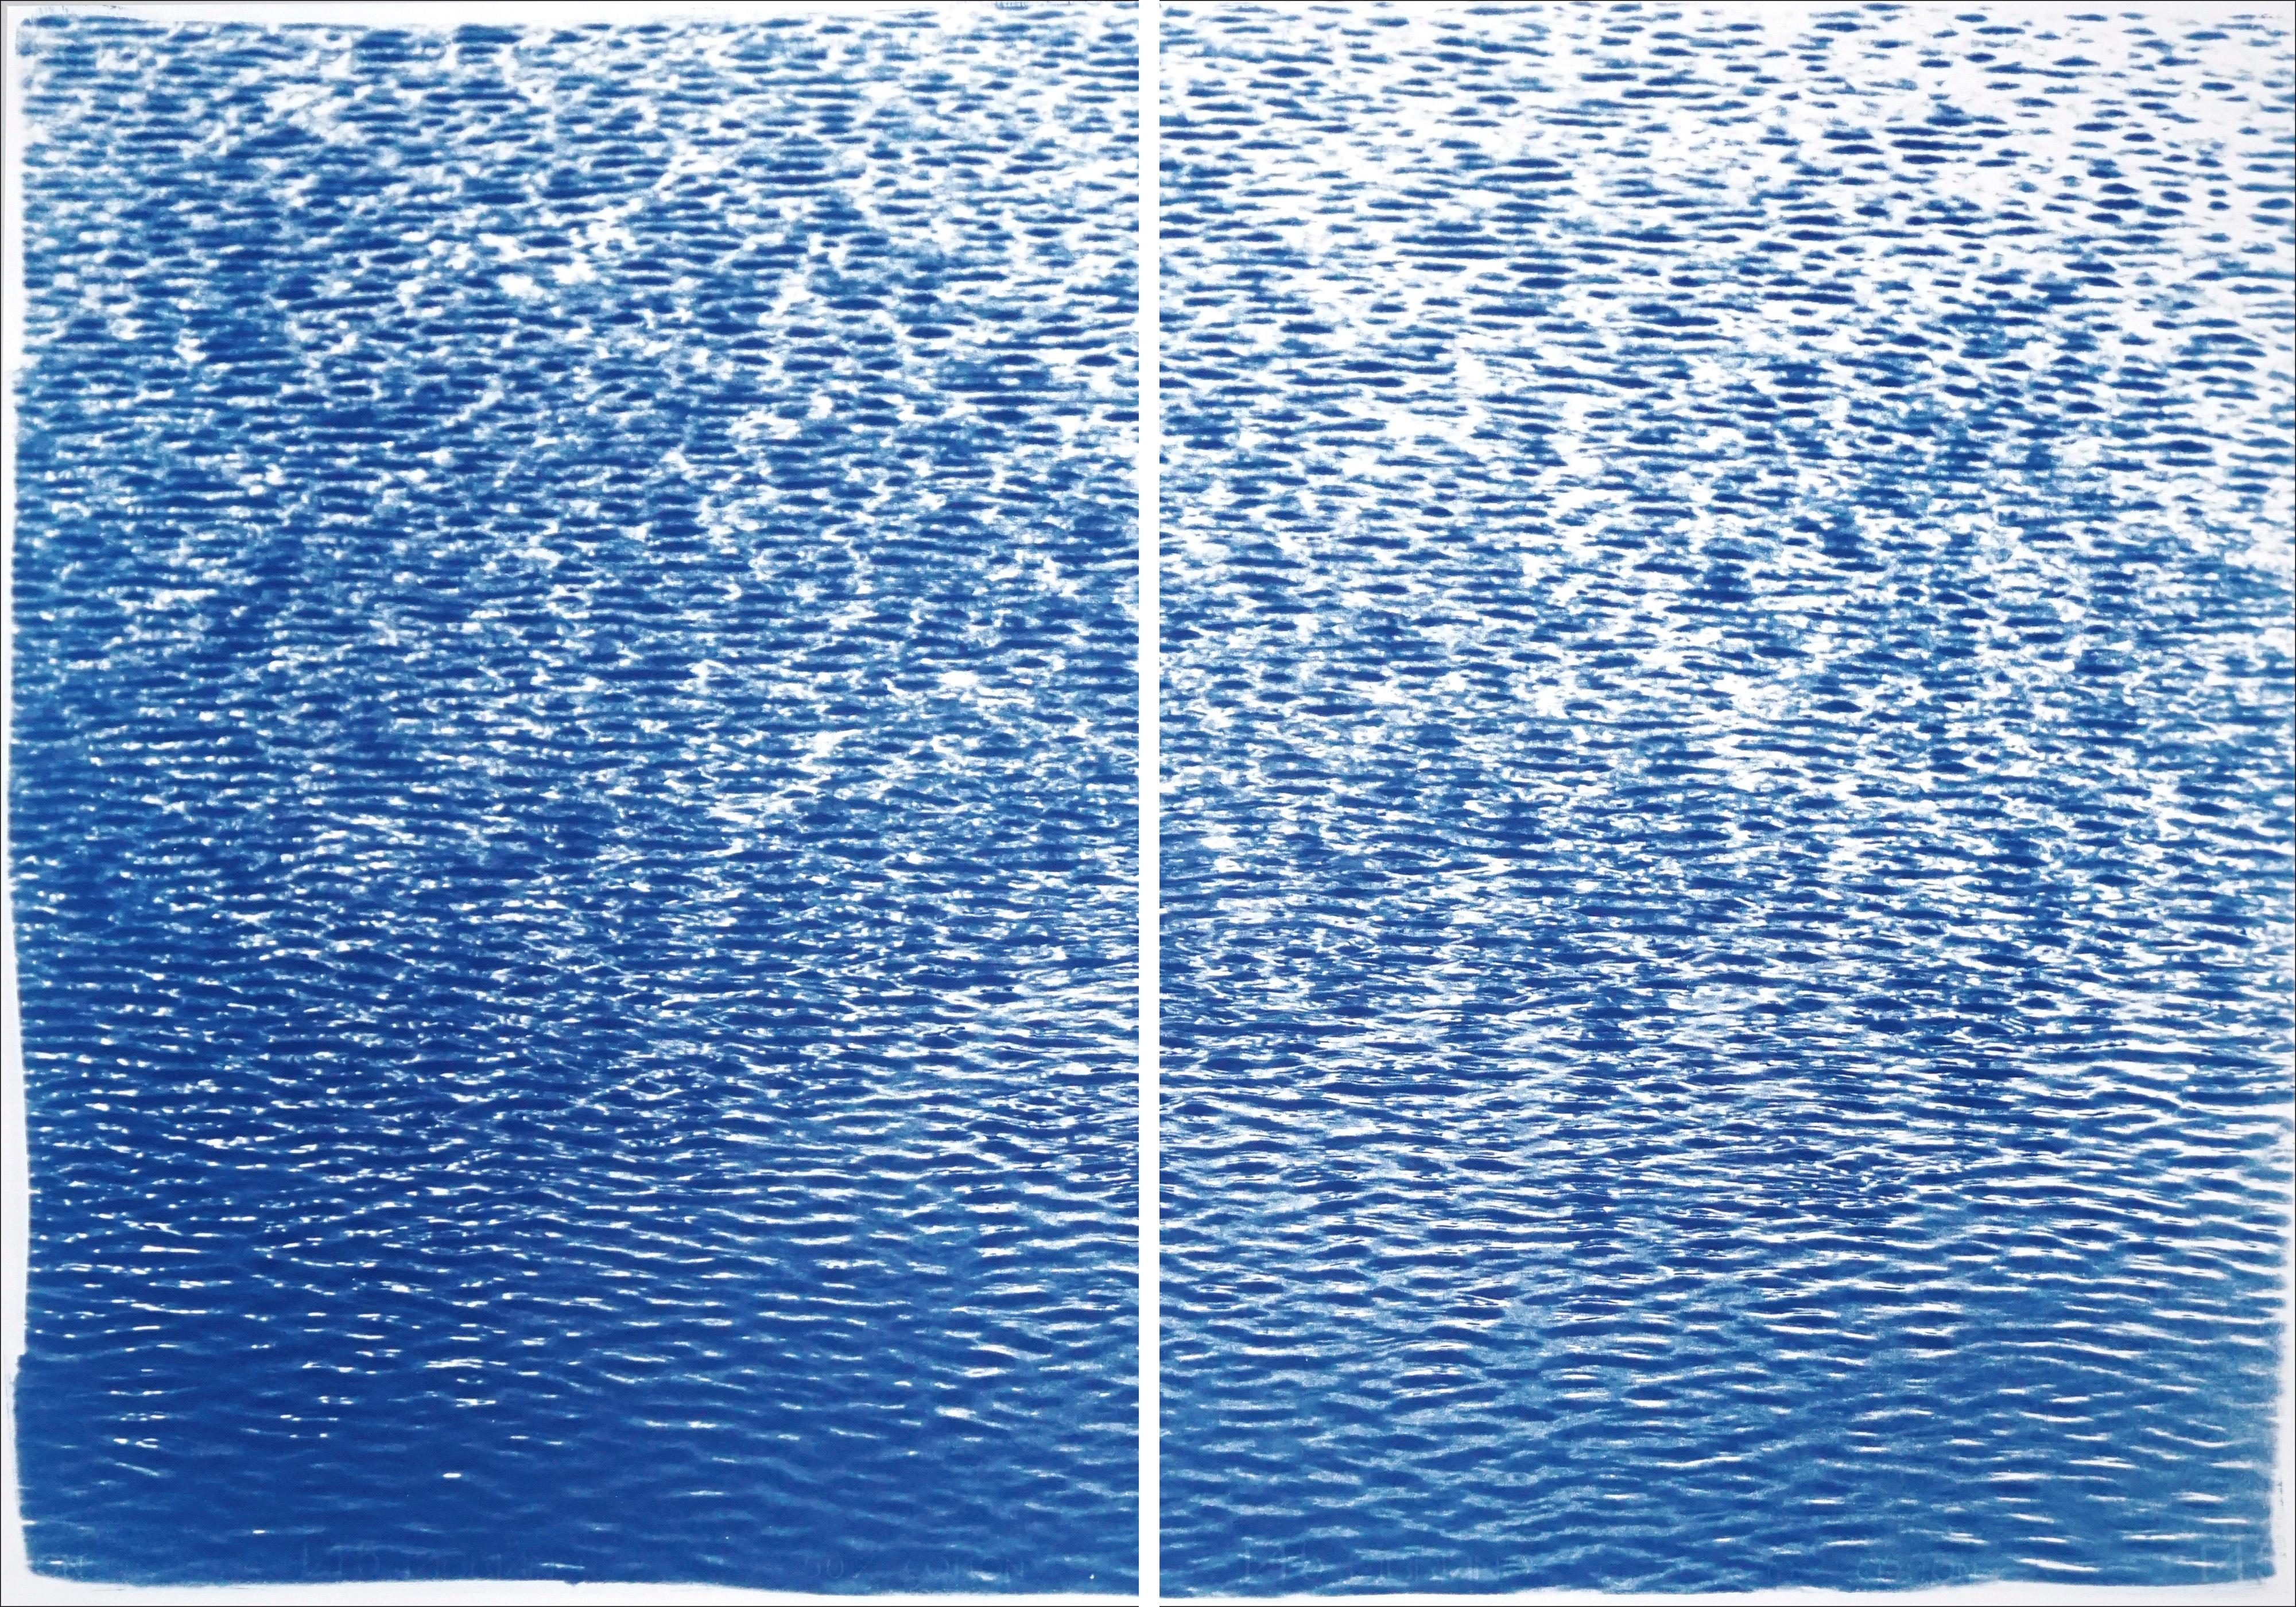 Kind of Cyan Landscape Print - Cove Ripples Diptych, Serene Seascape Cyanotype, Mediterranean Blue Shore, Paper